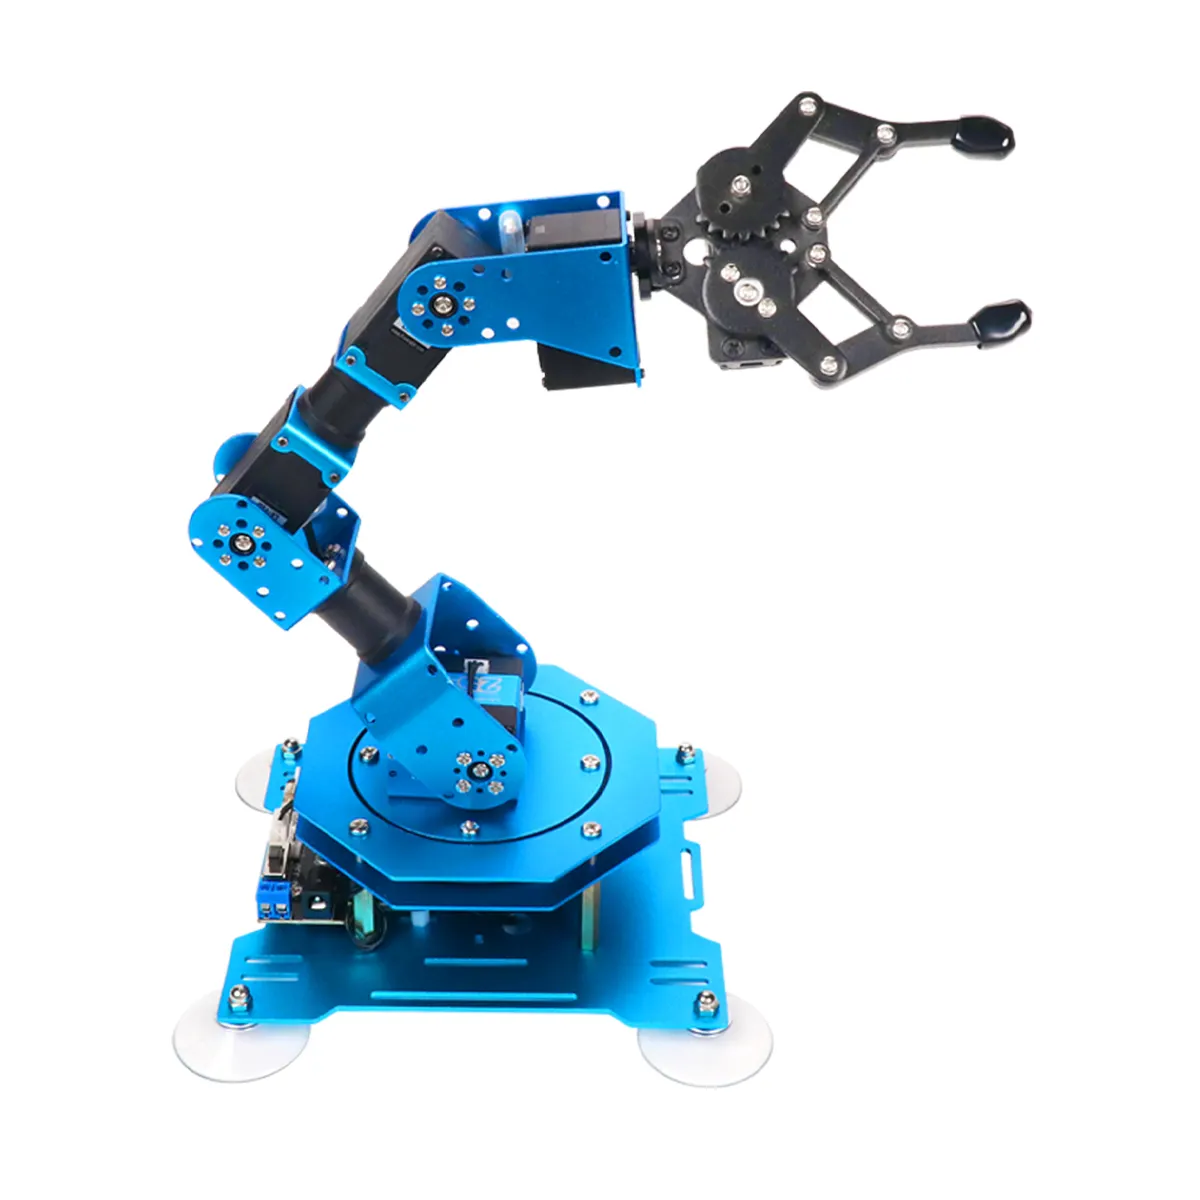 Hiwonder 1S Kit Dapat Diprogram 6D Lengan Robot Cerdas Manufaktur Robot Gudang